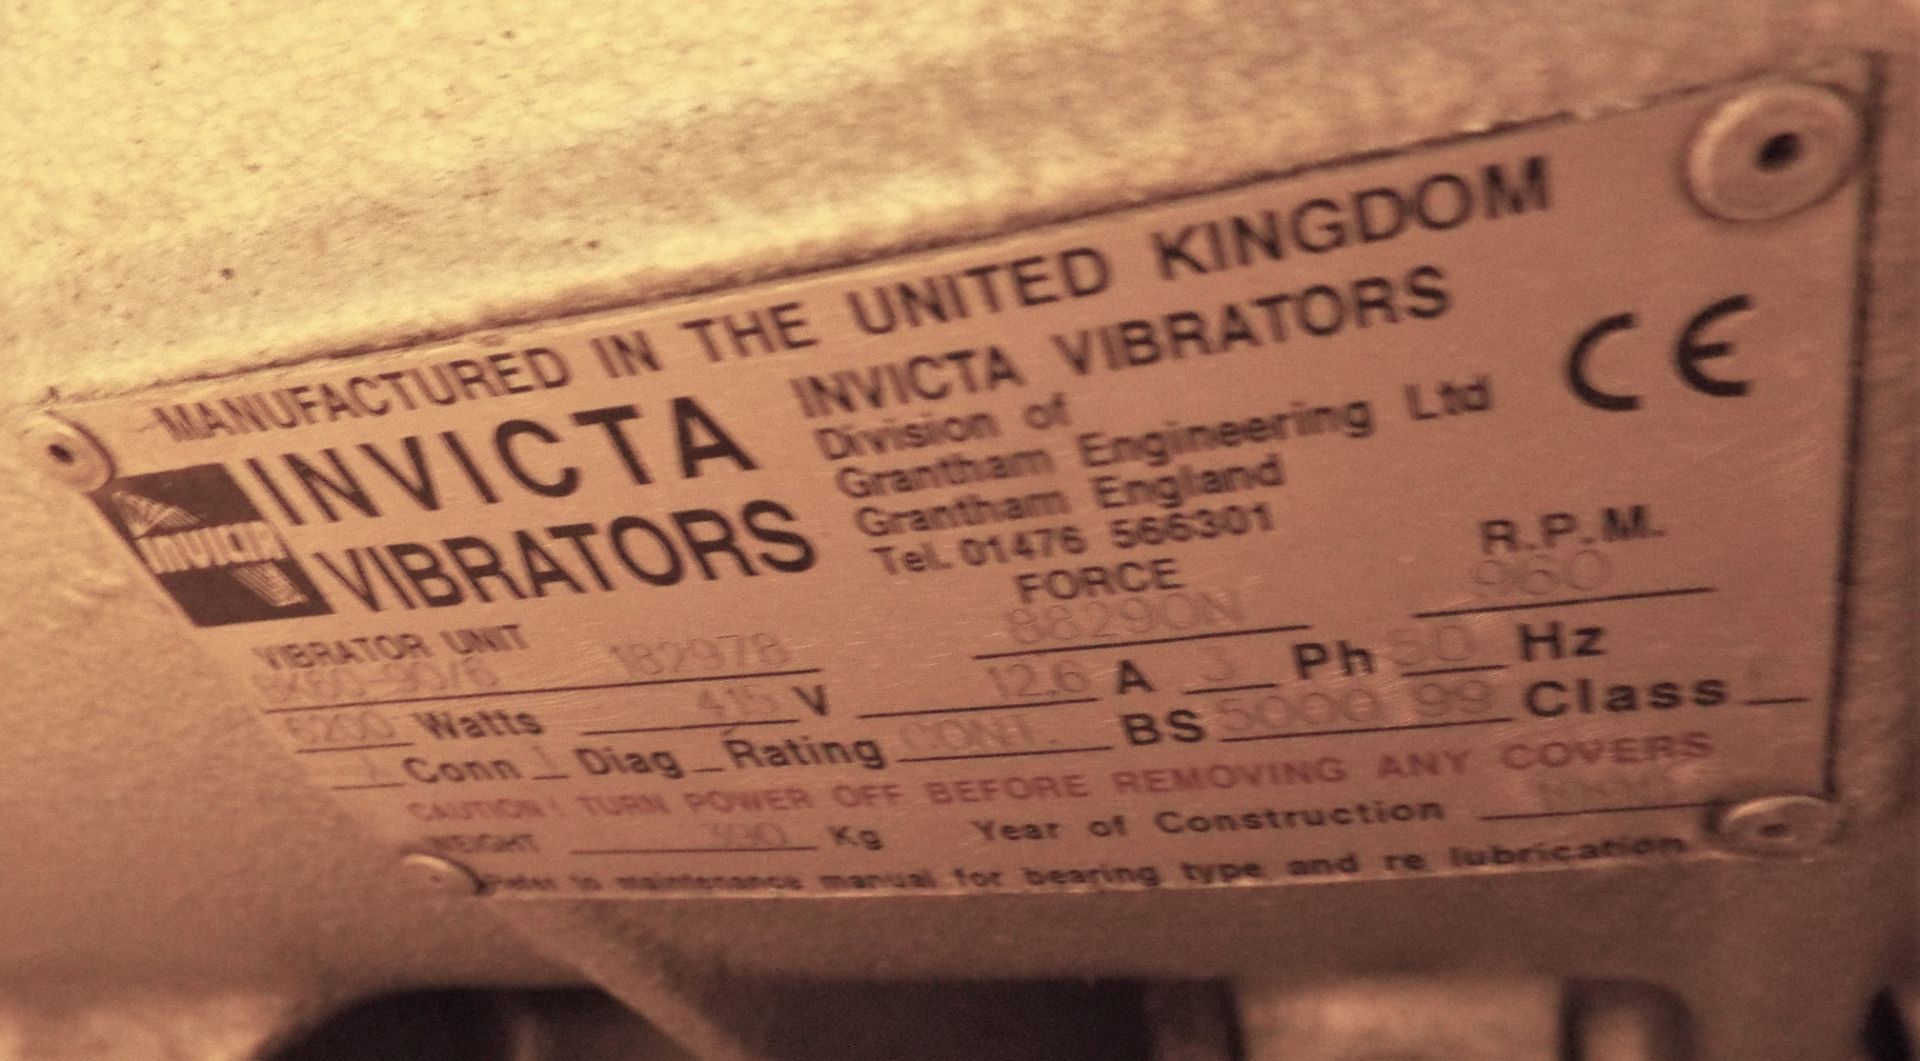 Invicta Vibratory Motor - Image 3 of 3